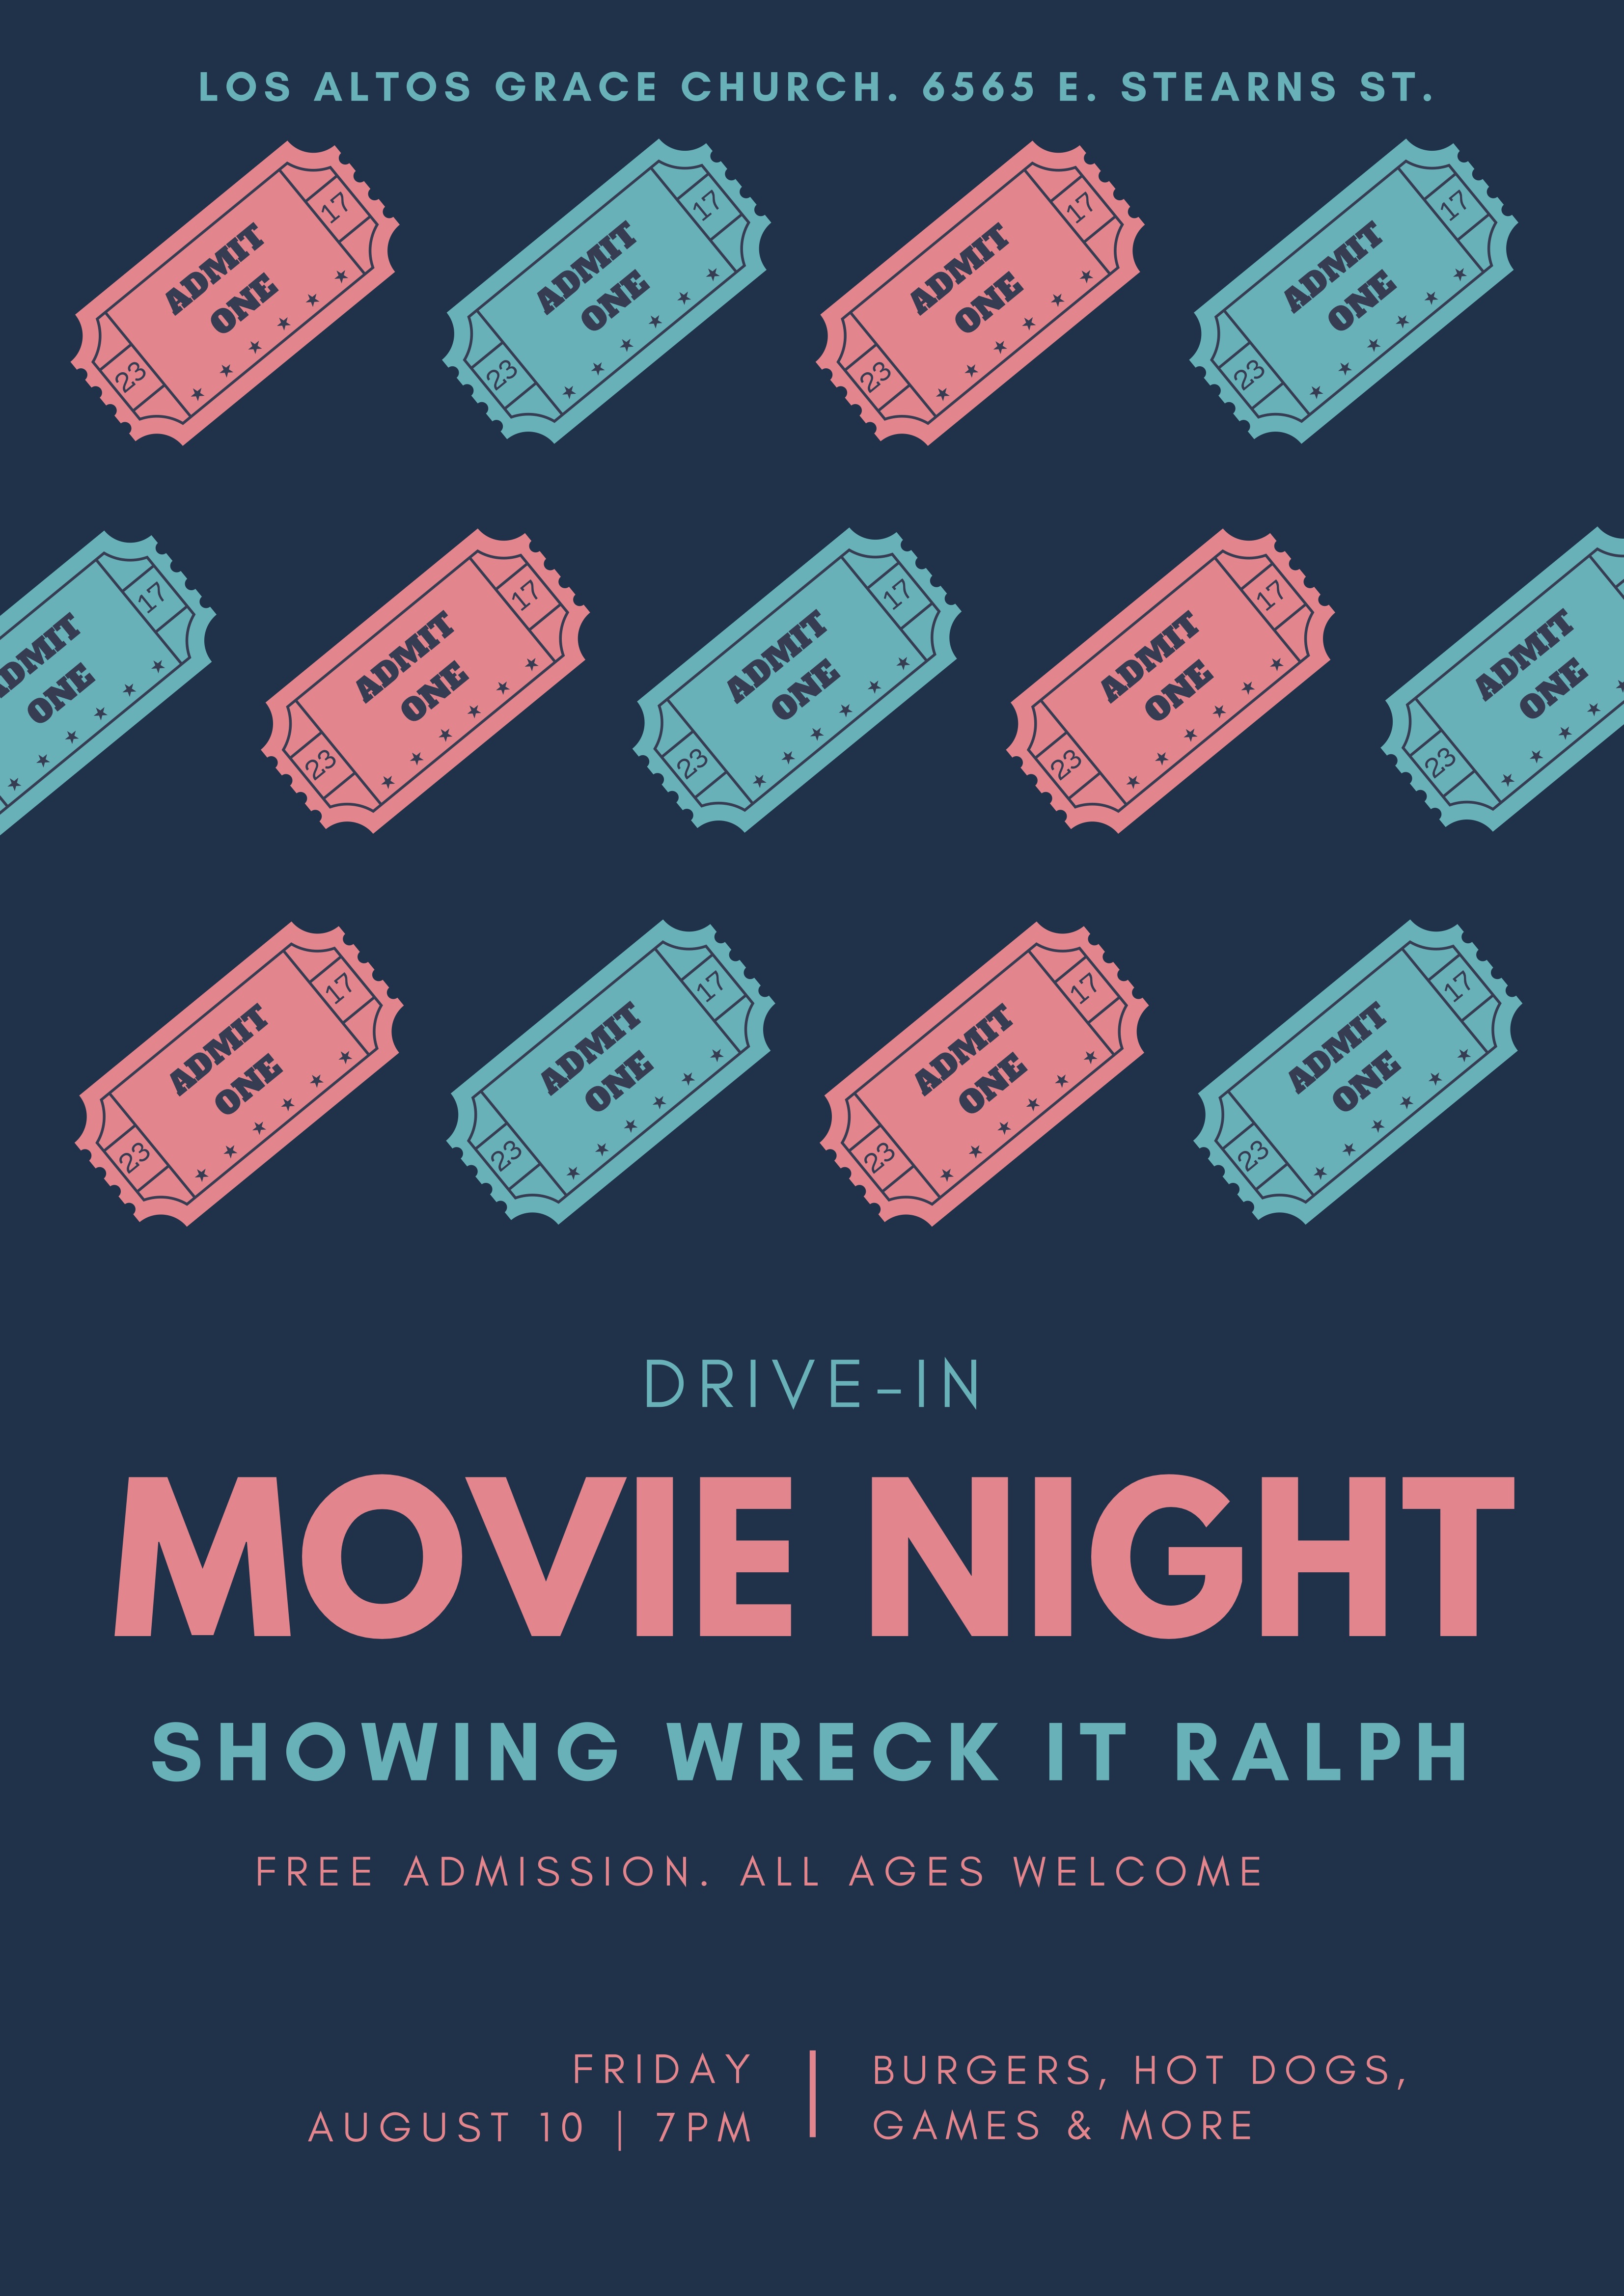 Friday is Community Movie Night!